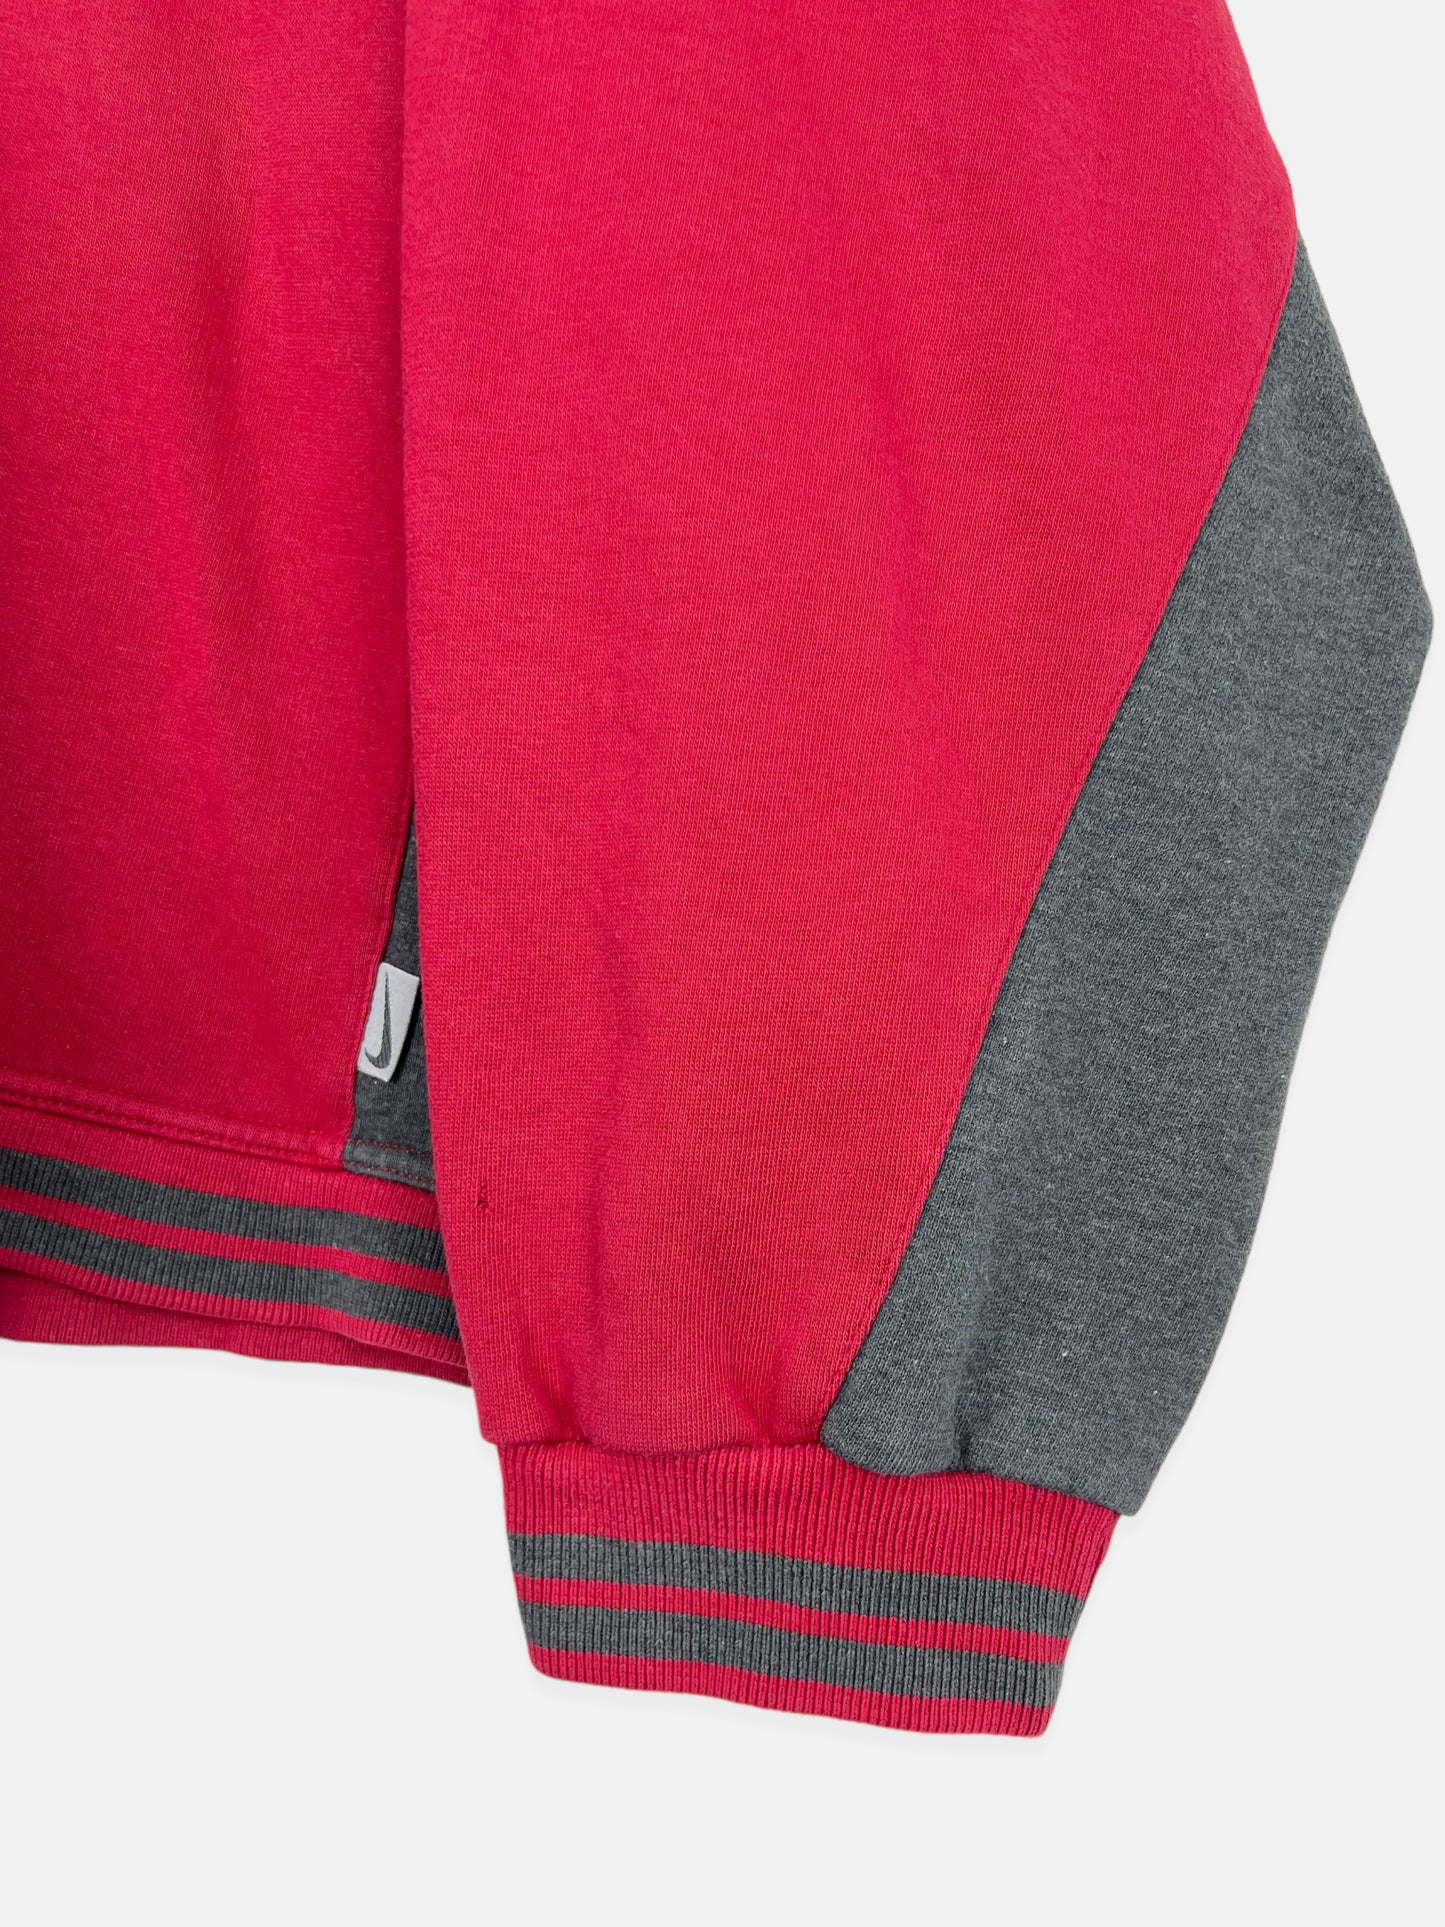 90's Nike Embroidered Vintage Quarterzip Sweatshirt Size 16-18